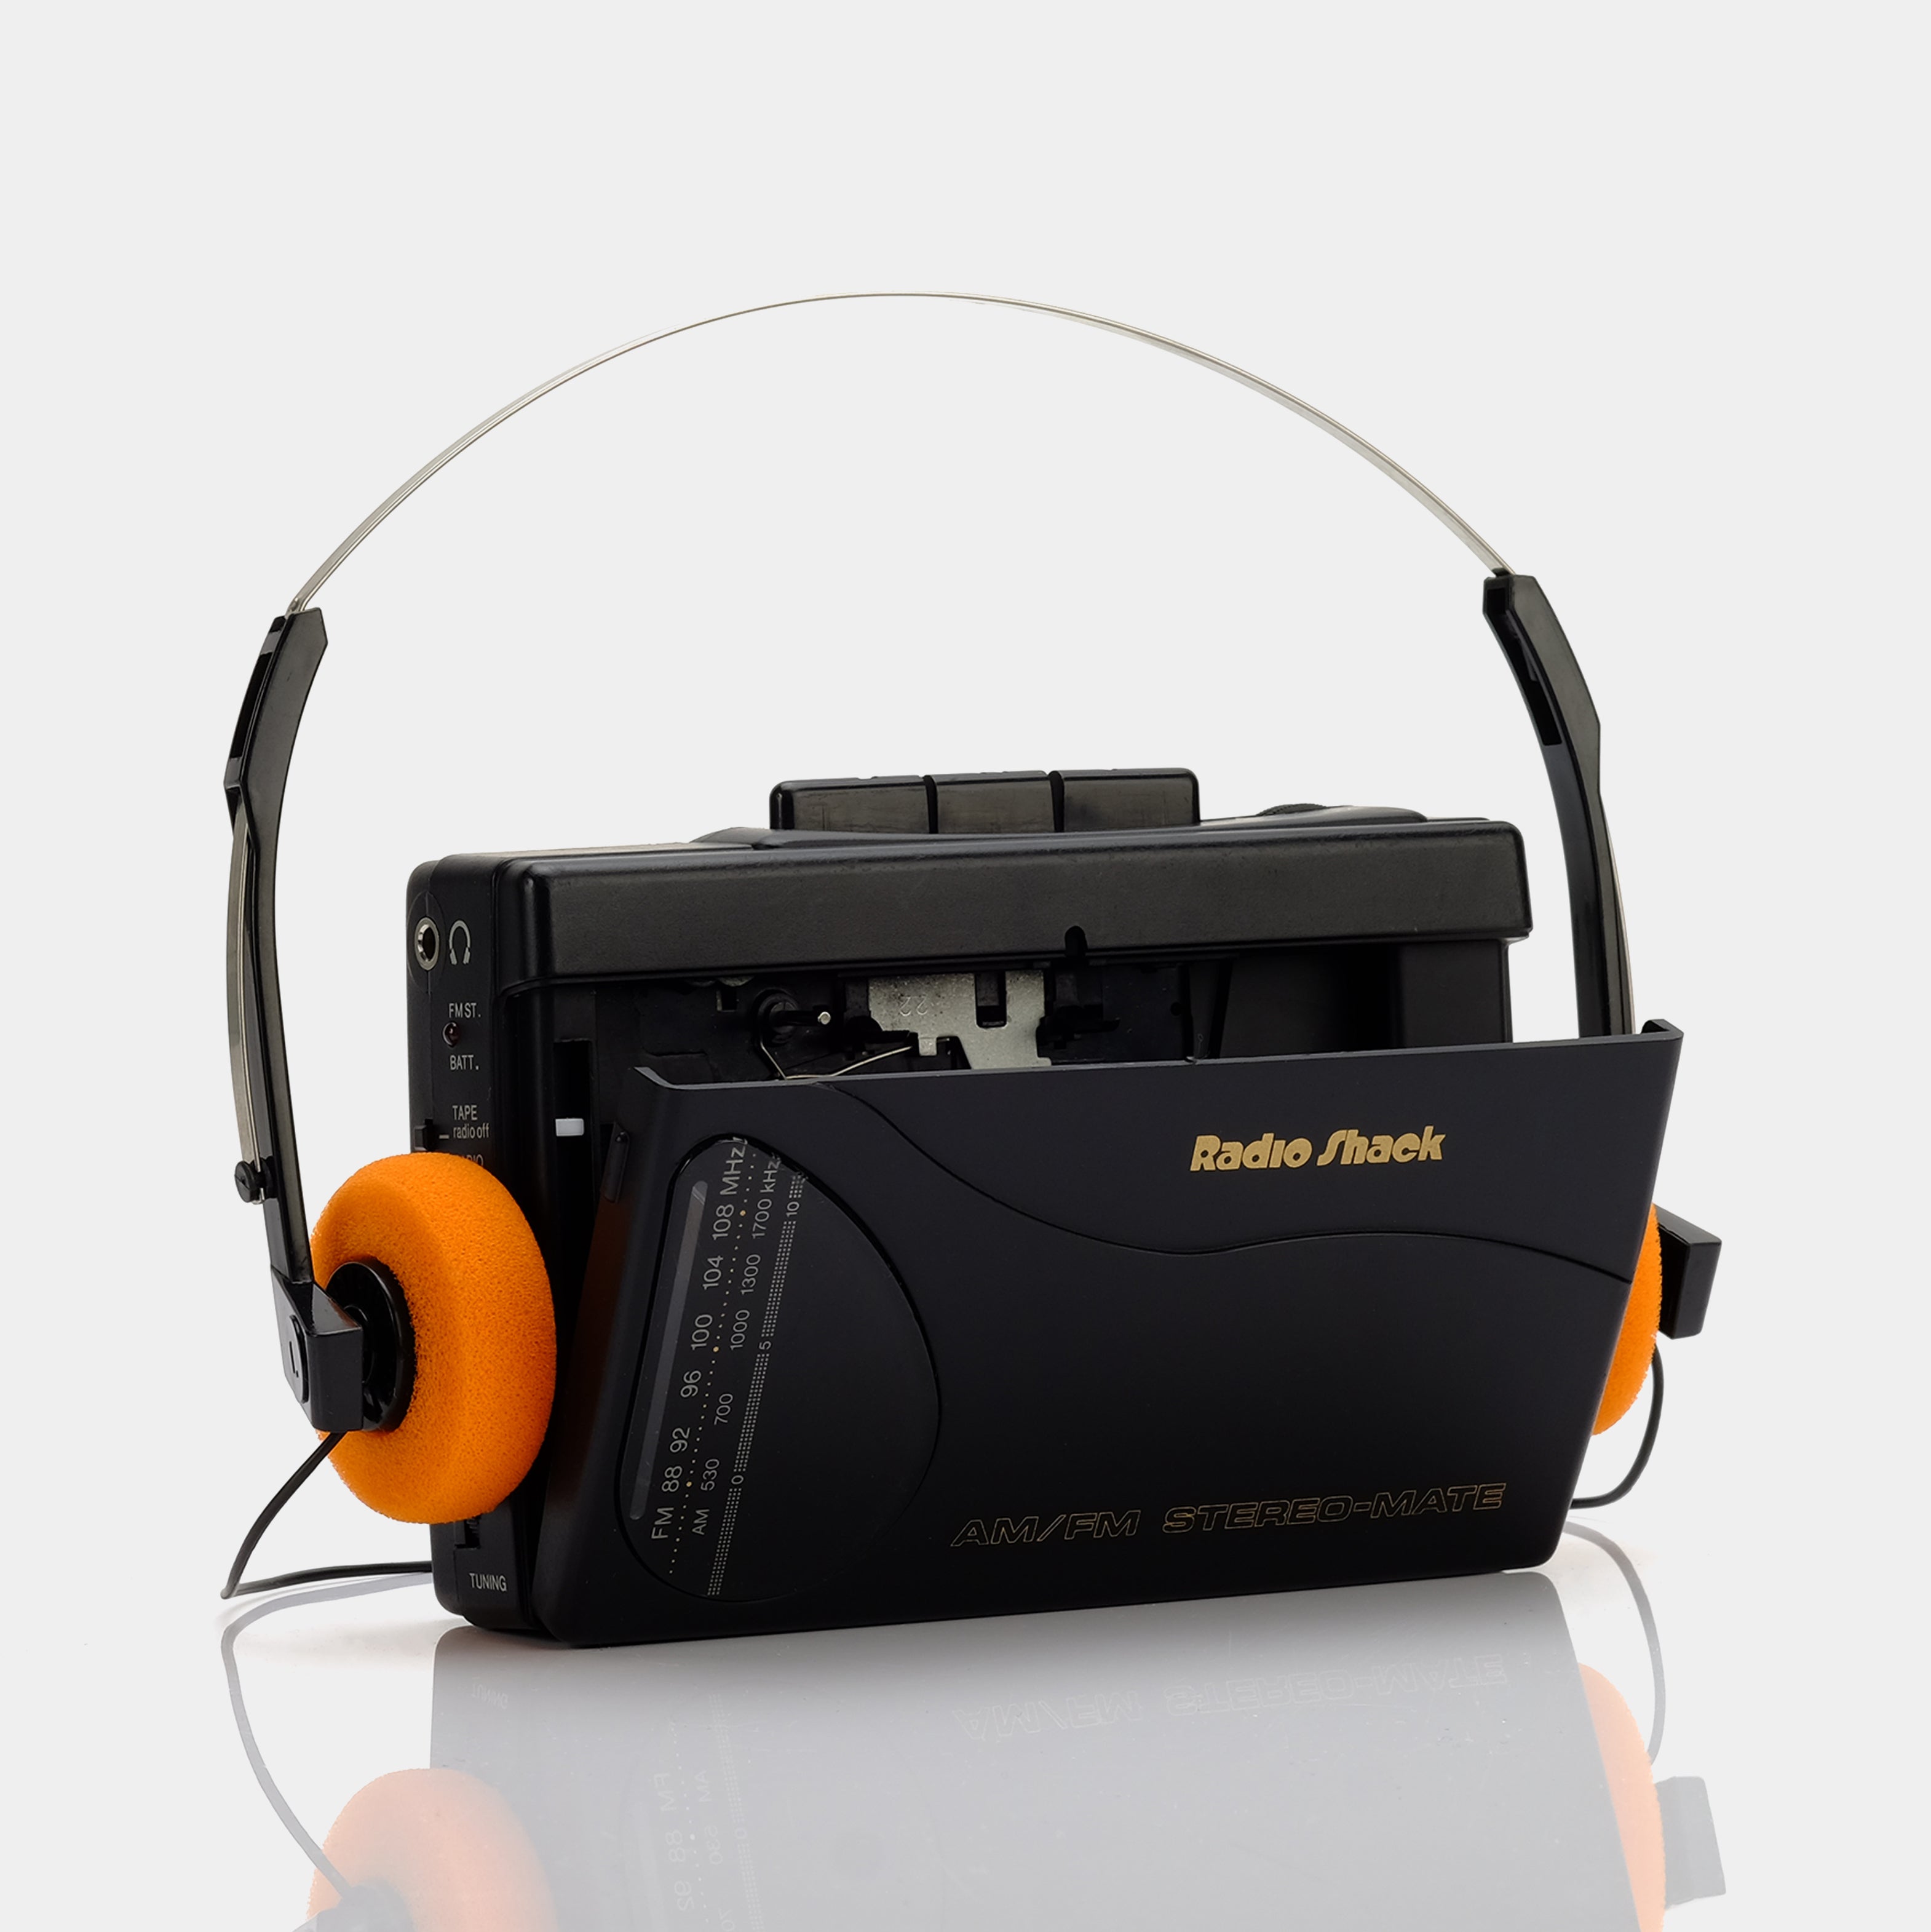 Radio Shack Stereo-Mate AM/FM Portable Cassette Player